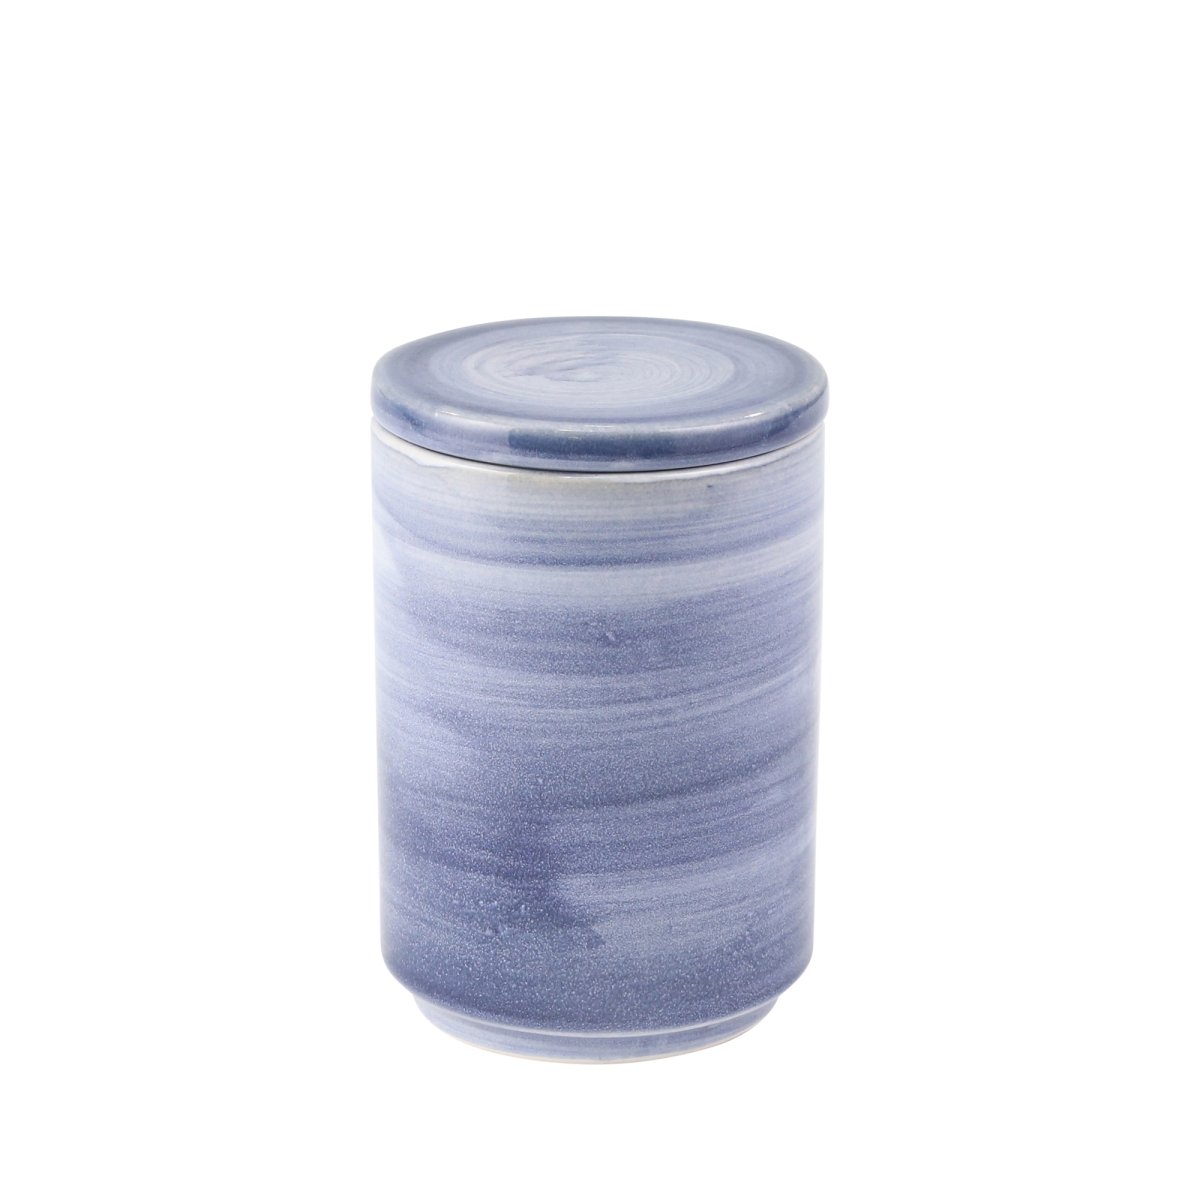 14147-02 8 In. Ceramic Covered Storage Jar, Blue